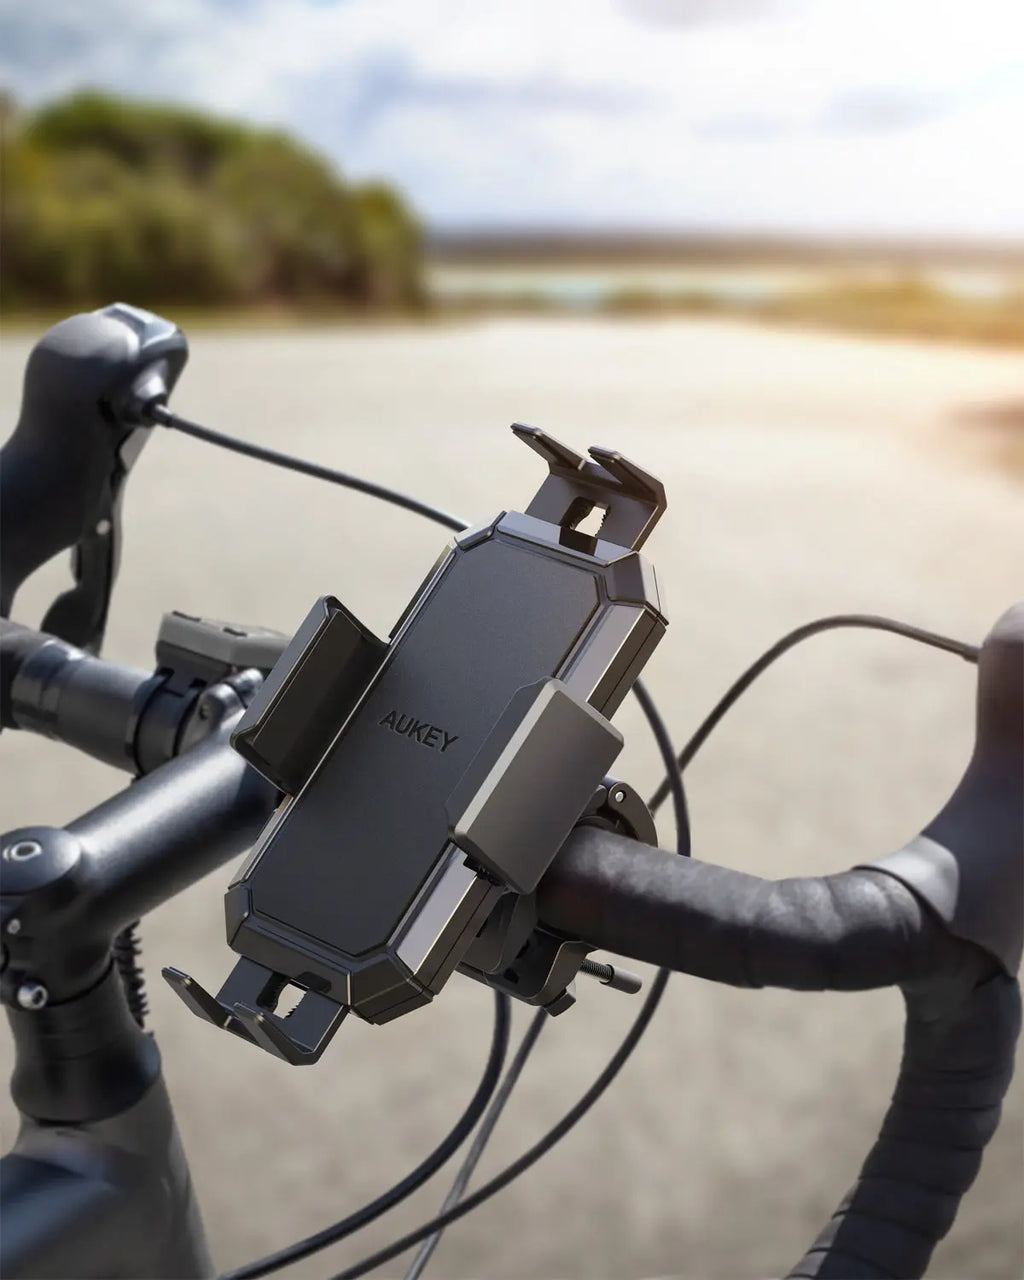 Fahrrad-Handyhalterung Strong, 360 Grad drehbar, univers. für Smartphones